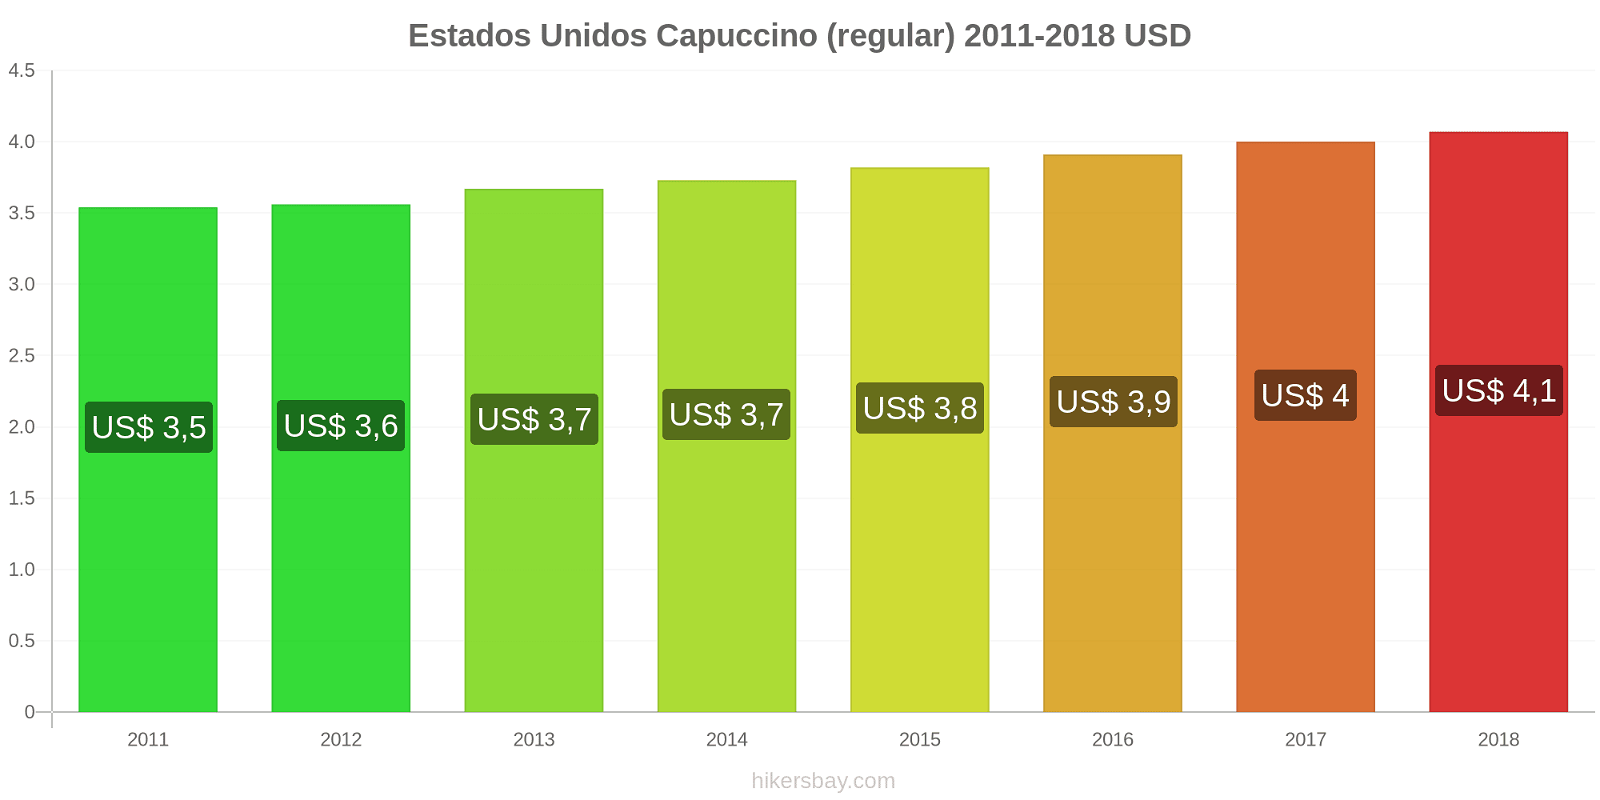 Estados Unidos mudanças de preços Cappuccino hikersbay.com